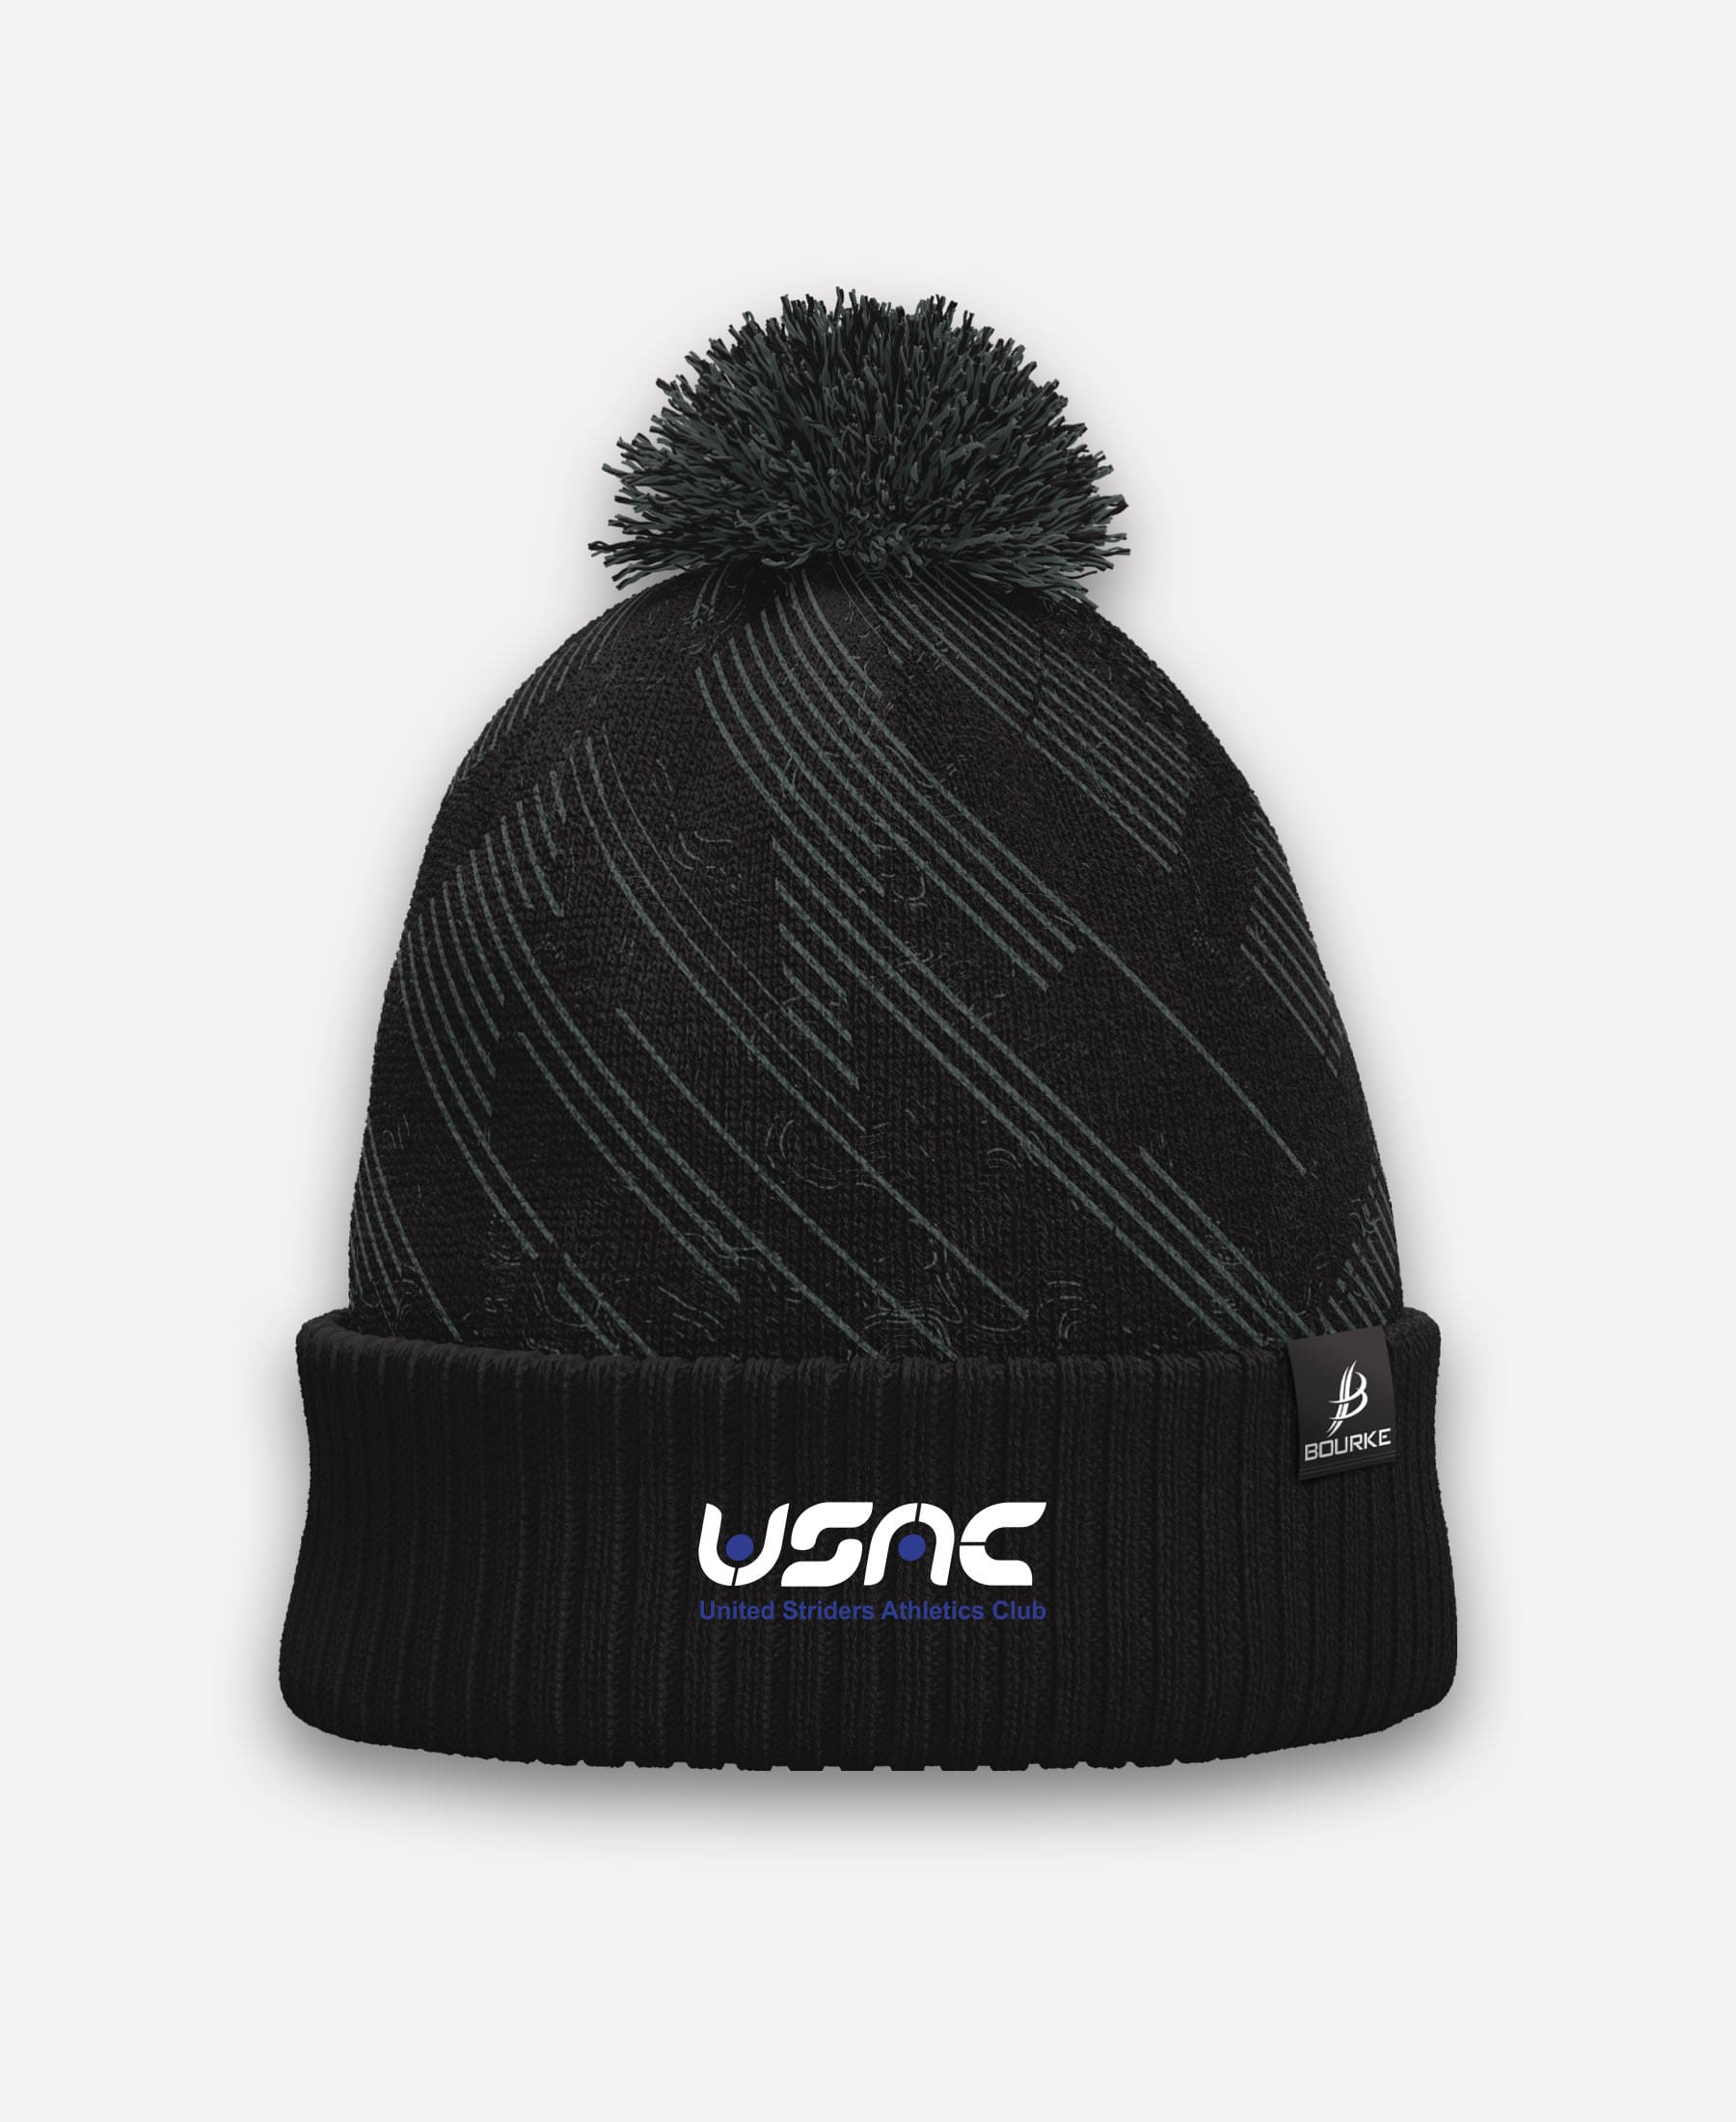 United Striders BARR Bobble Hat (Black/Grey)